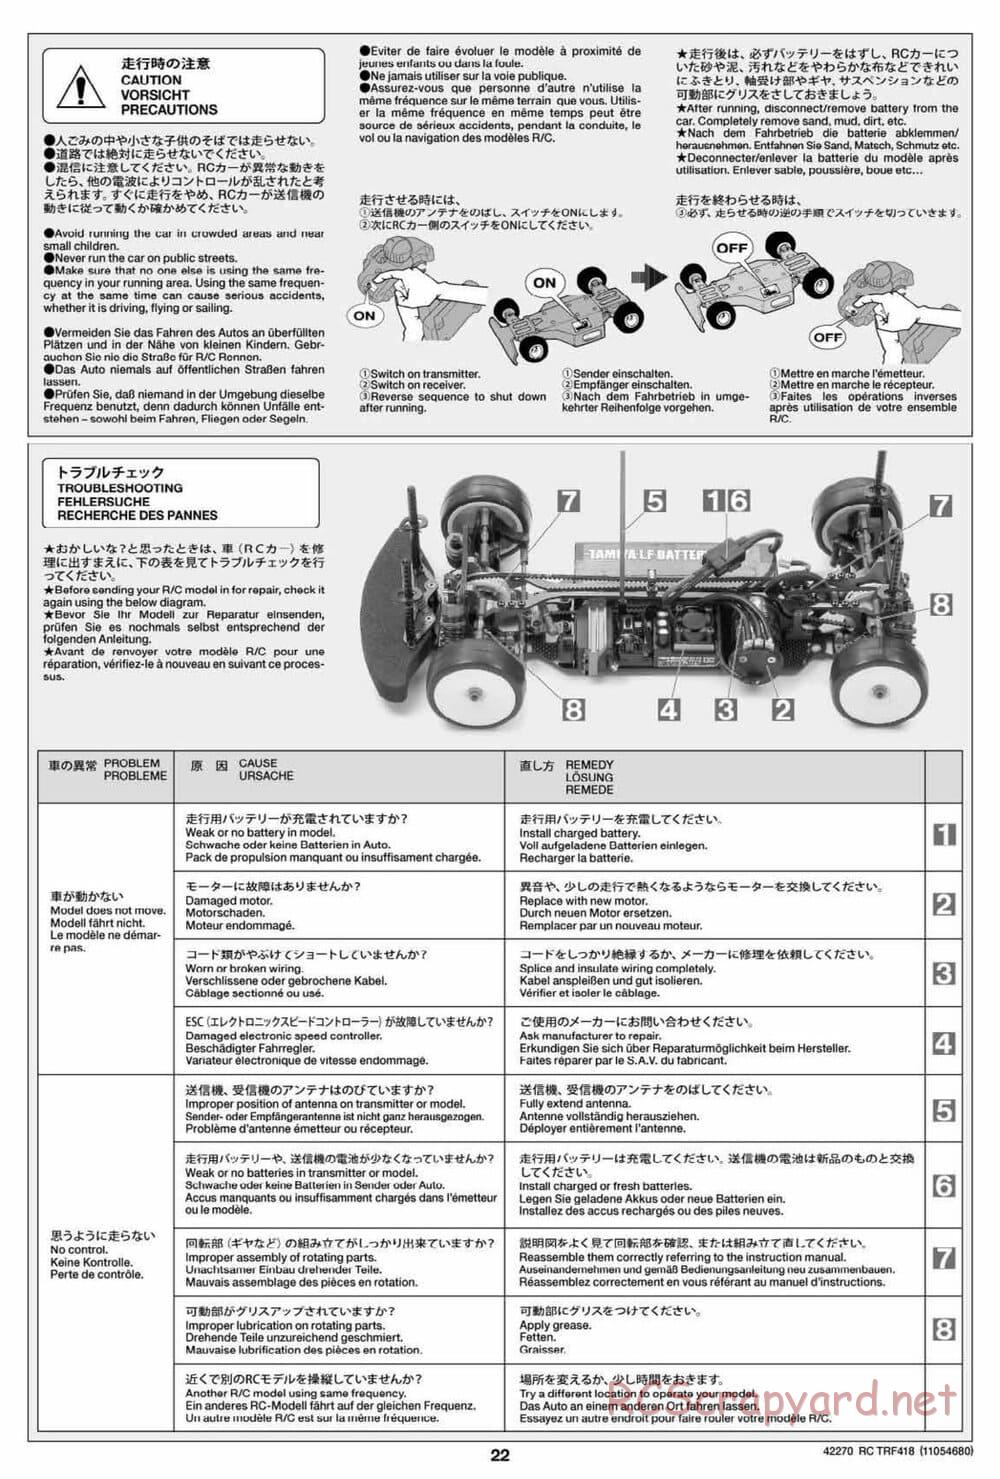 Tamiya - TRF418 Chassis - Manual - Page 22